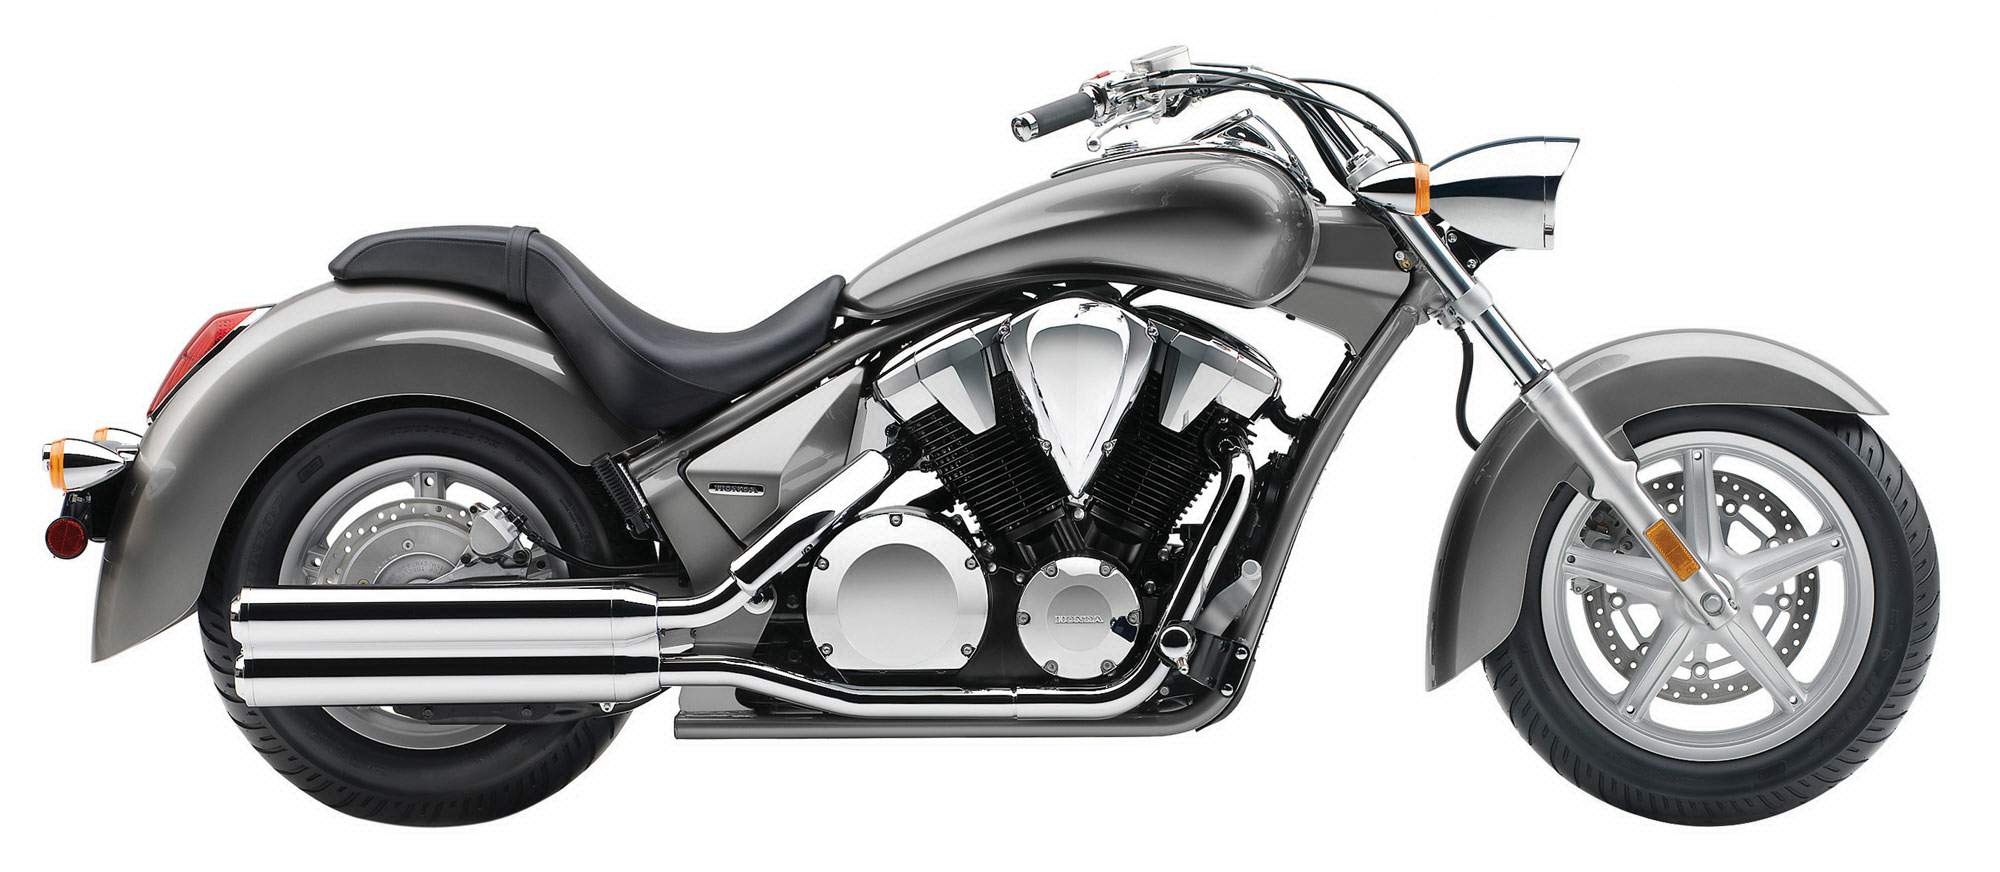 Мотоцикл Honda VT 1300CR Stateline 2012